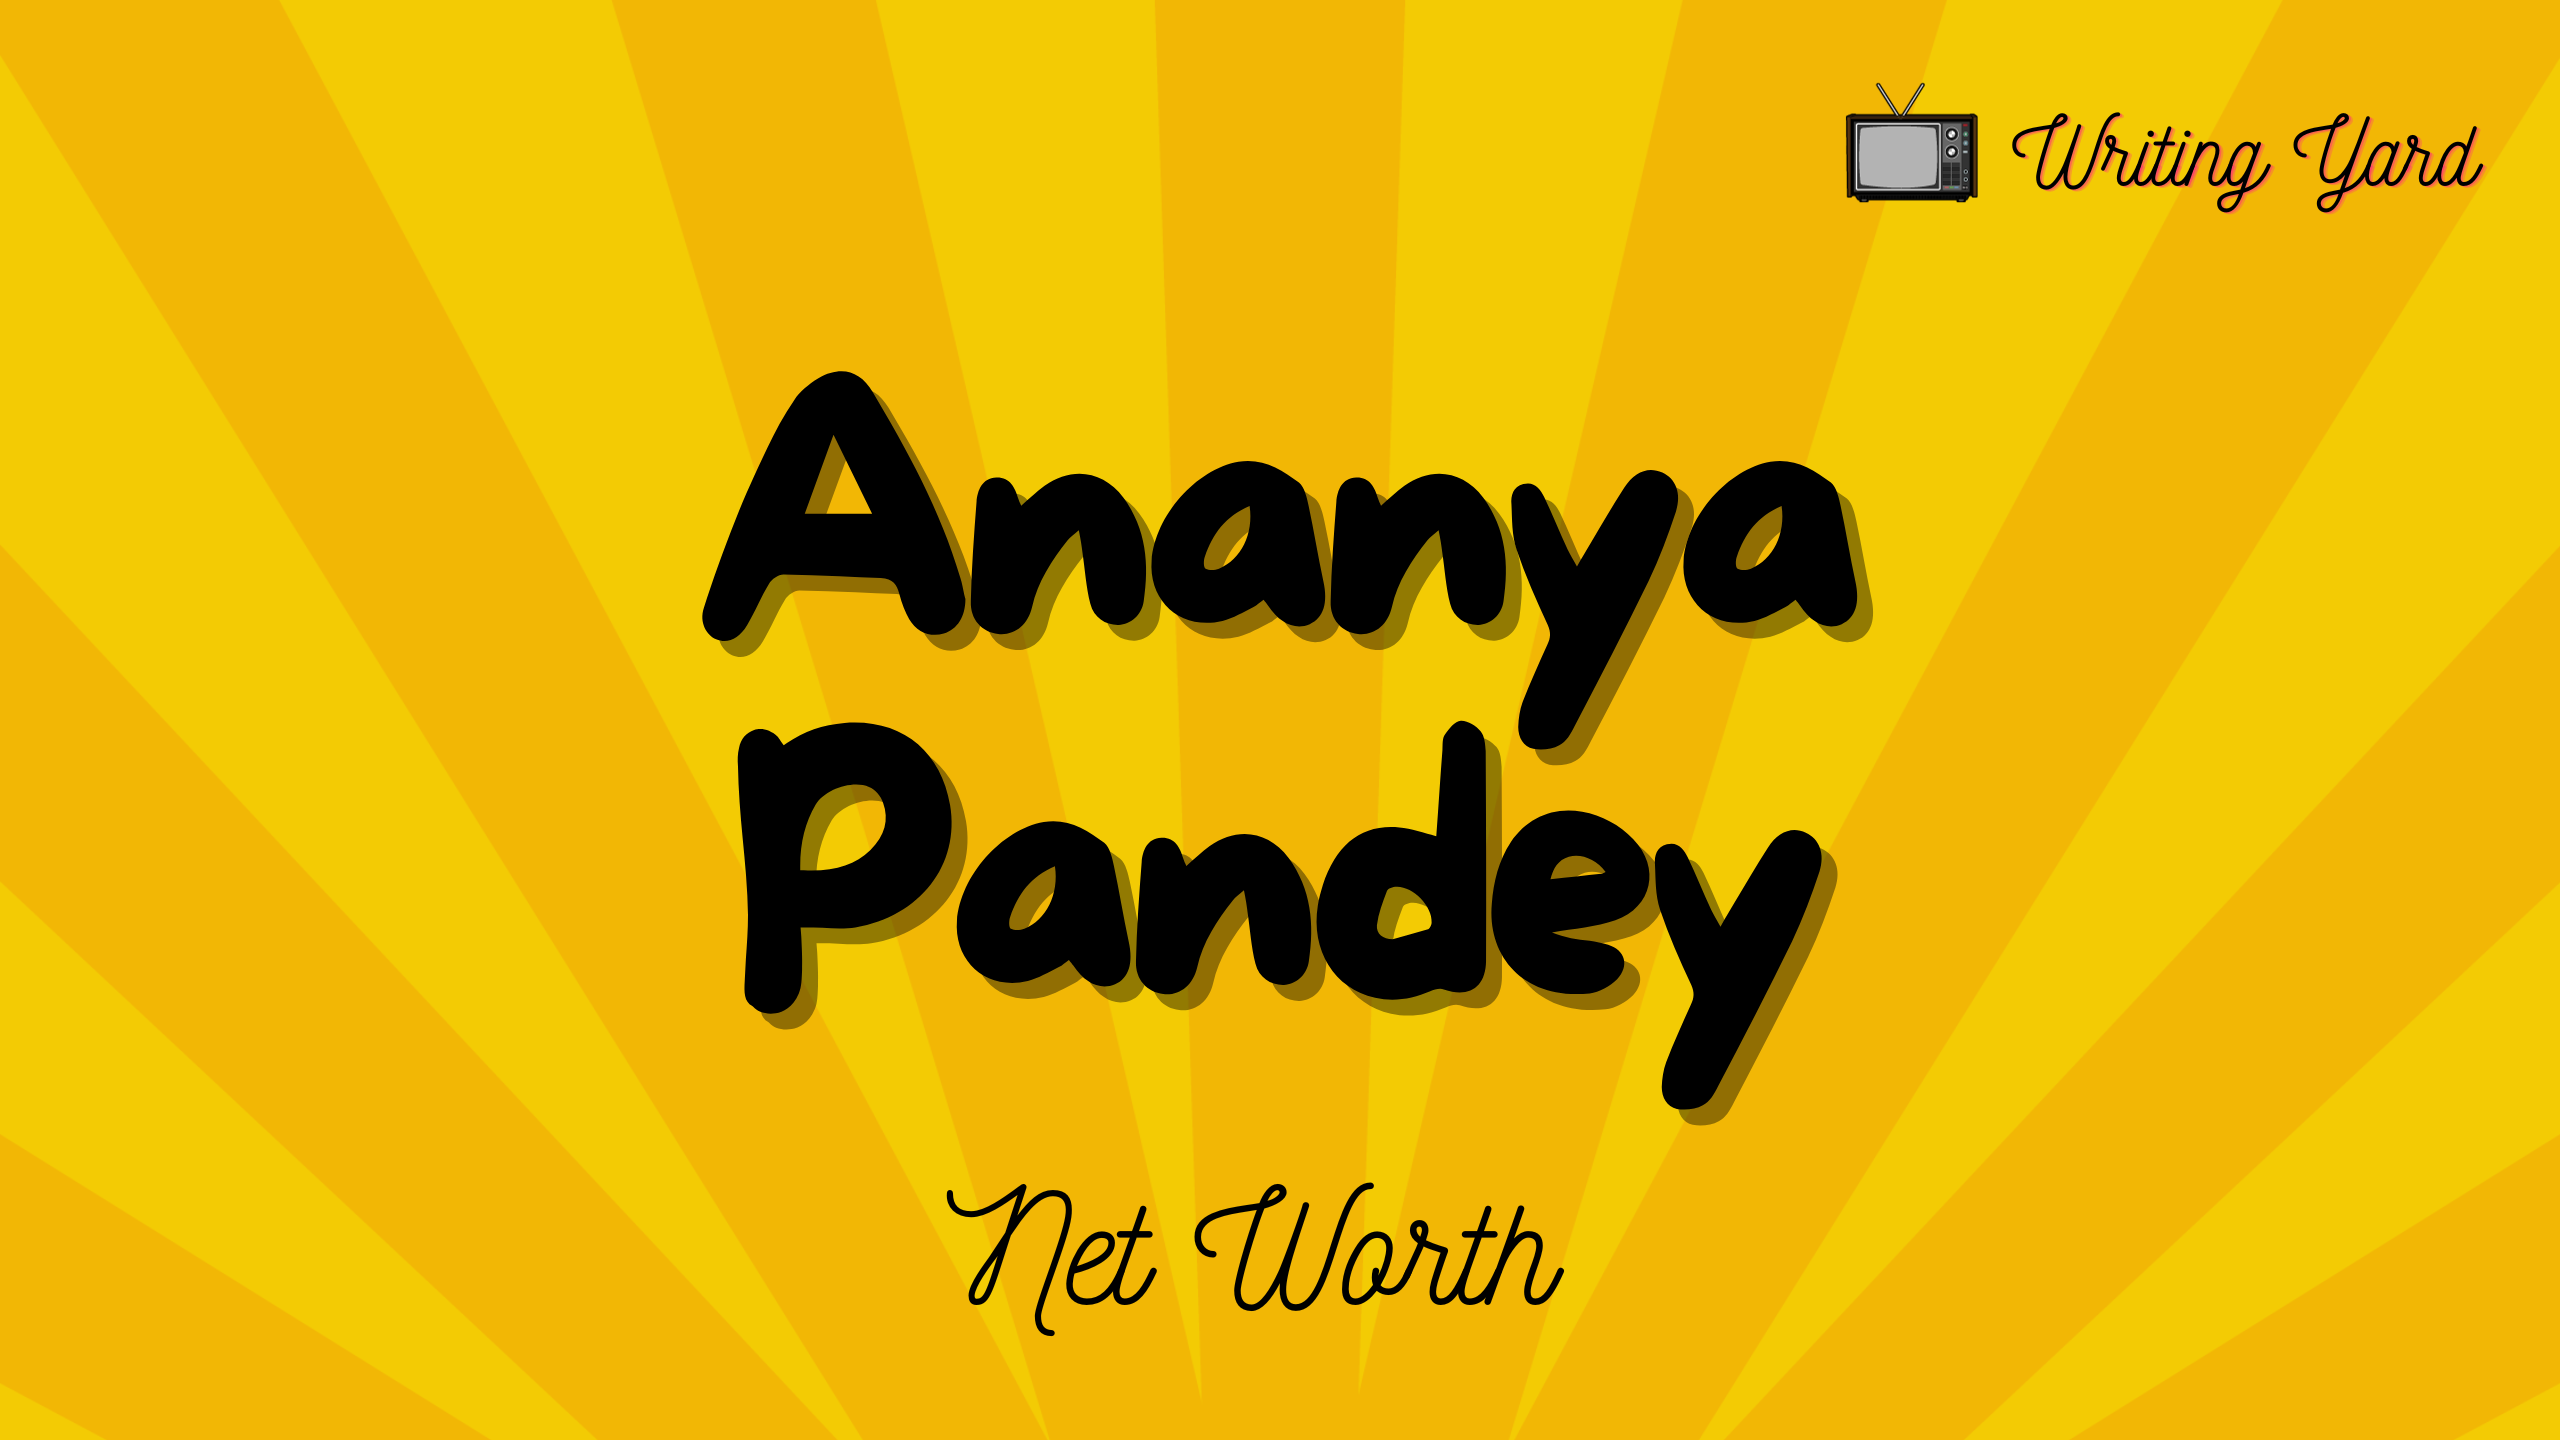 Ananya Pandey Net Worth